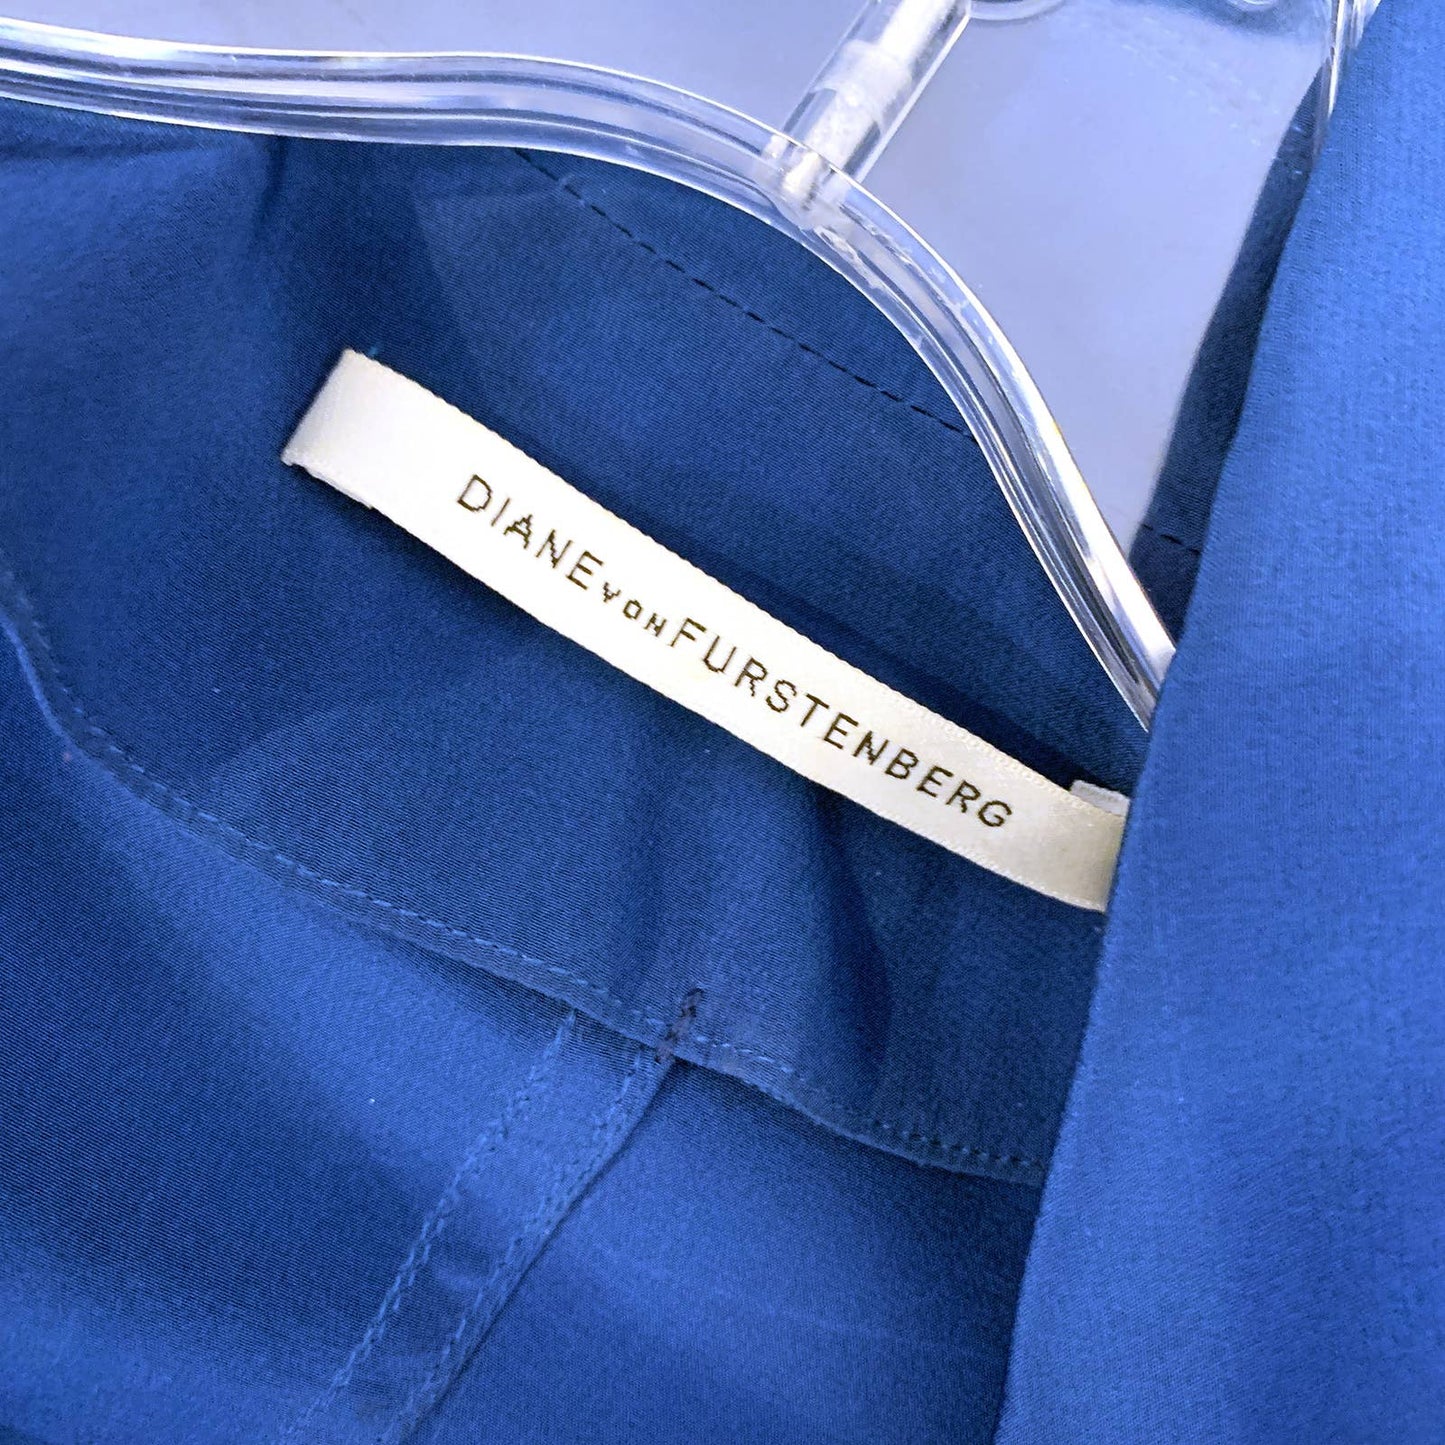 DIANE VON FURSTENBERG Blue Long Sleeved Silk Shirt Dress